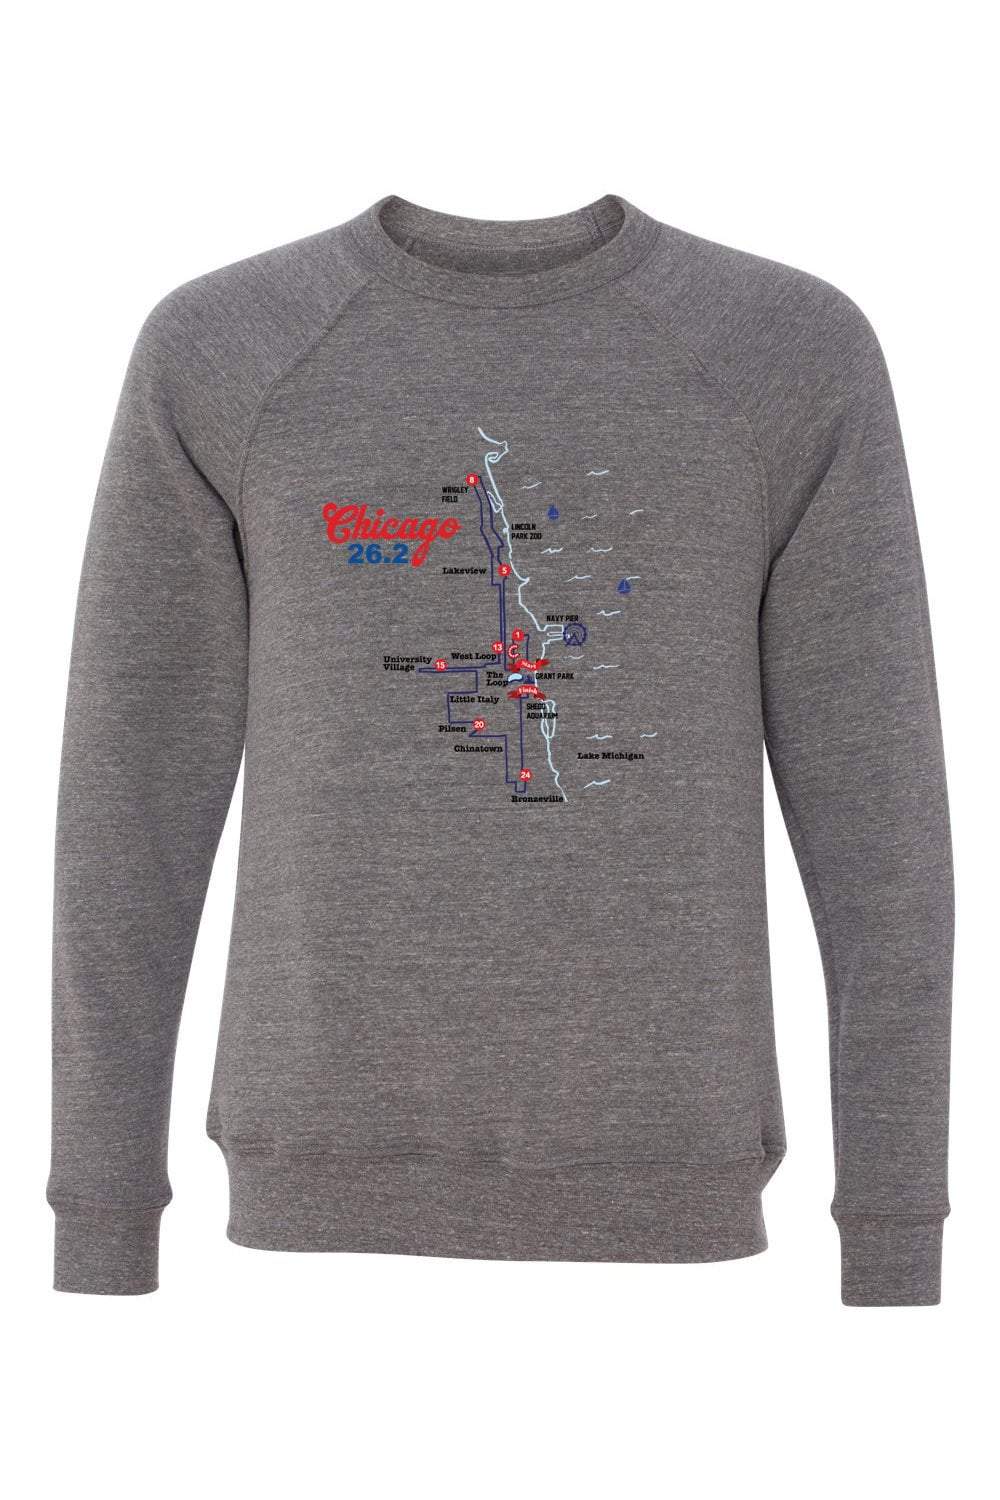 Sarah Marie Design Studio Sweatshirt Chicago Marathon Map Sweatshirt